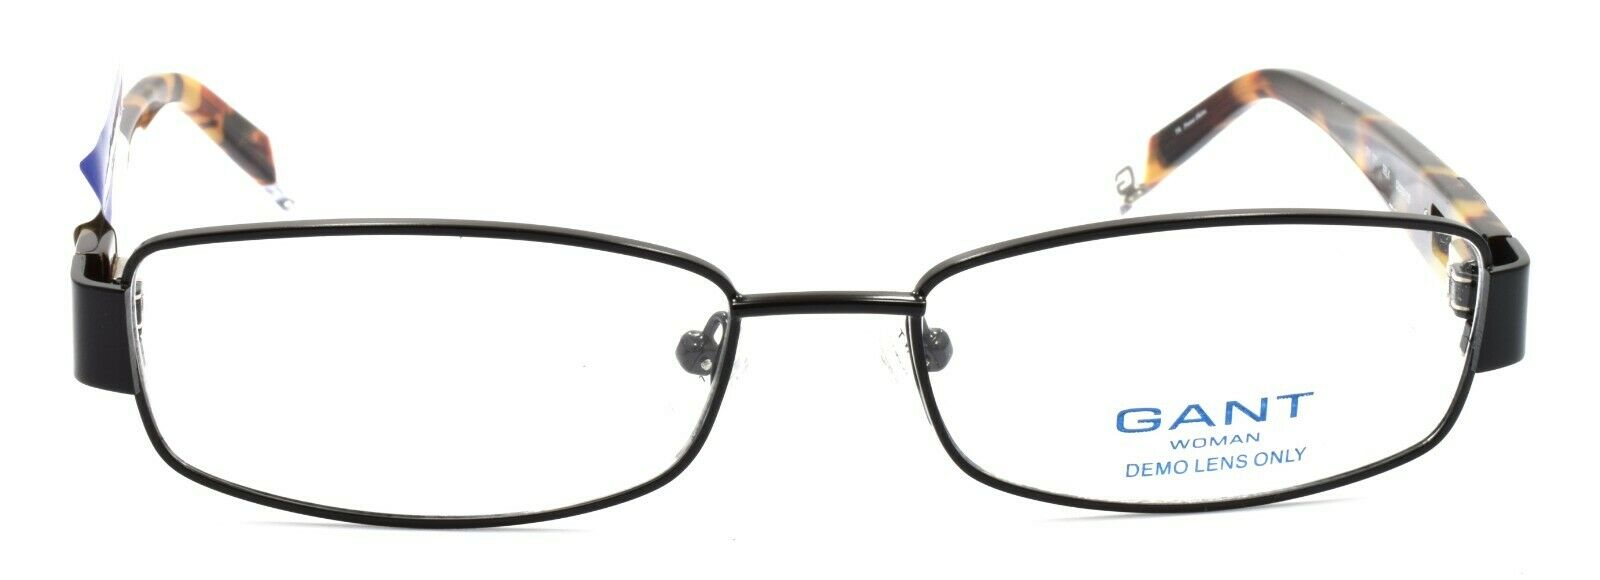 2-GANT GW IVY SBLK Women's Eyeglasses Frames 52-16-135 Satin Black + CASE-715583288720-IKSpecs